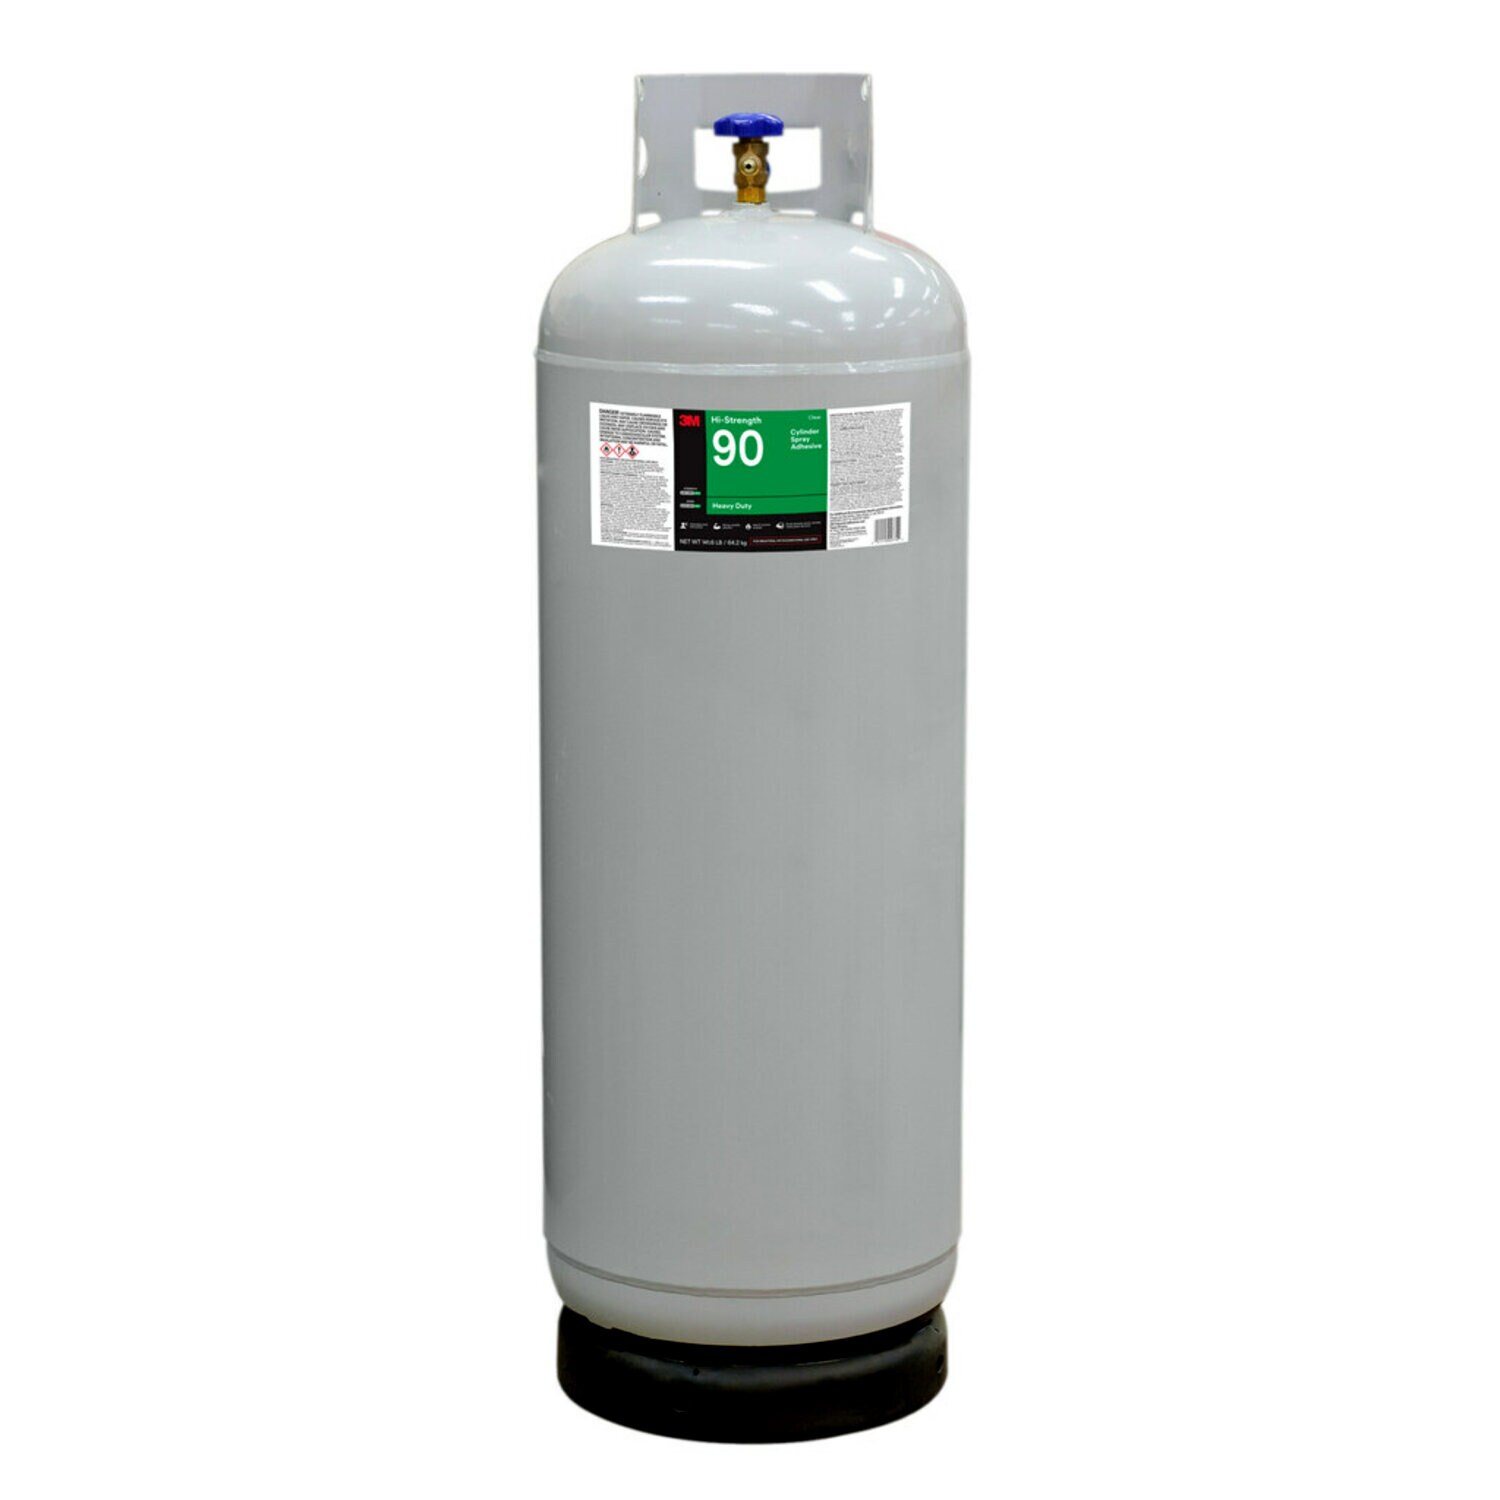 7010330403 - 3M Hi-Strength 90 Cylinder Spray Adhesive, Clear, Intermediate Cylinder
(Net Wt 141.6 lb)